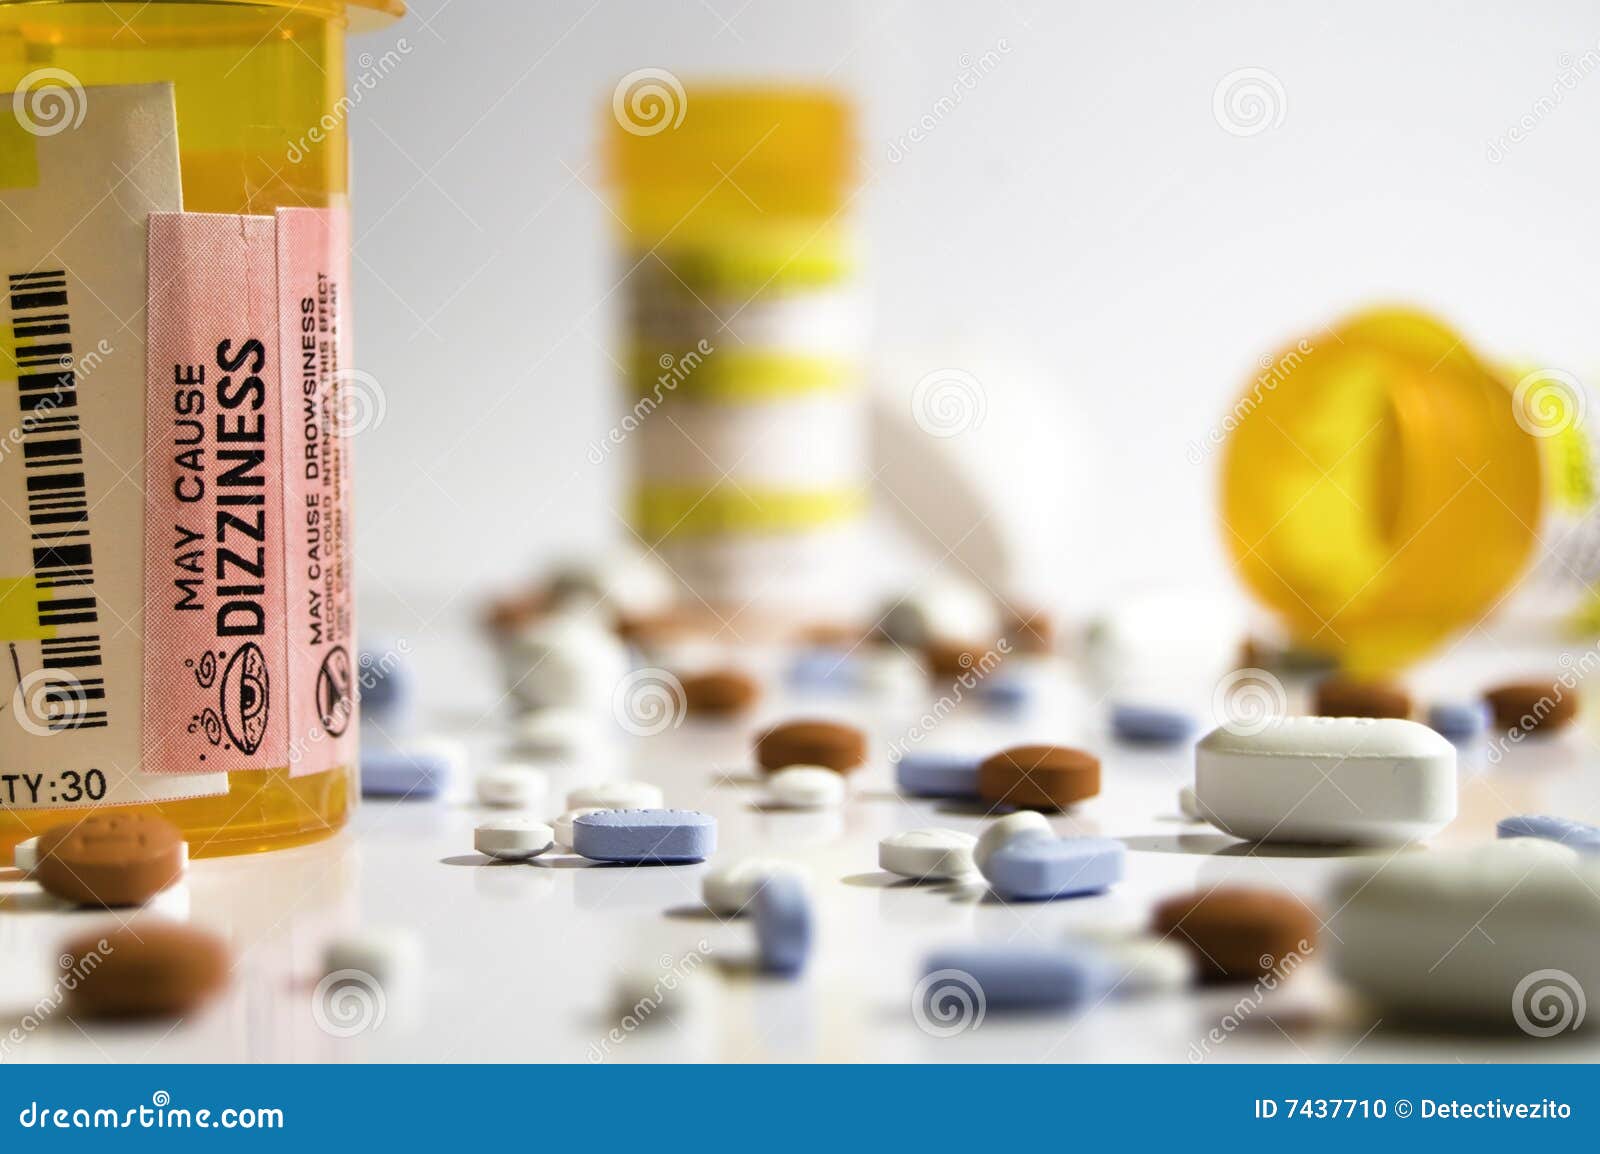 pills, medicines and bottles